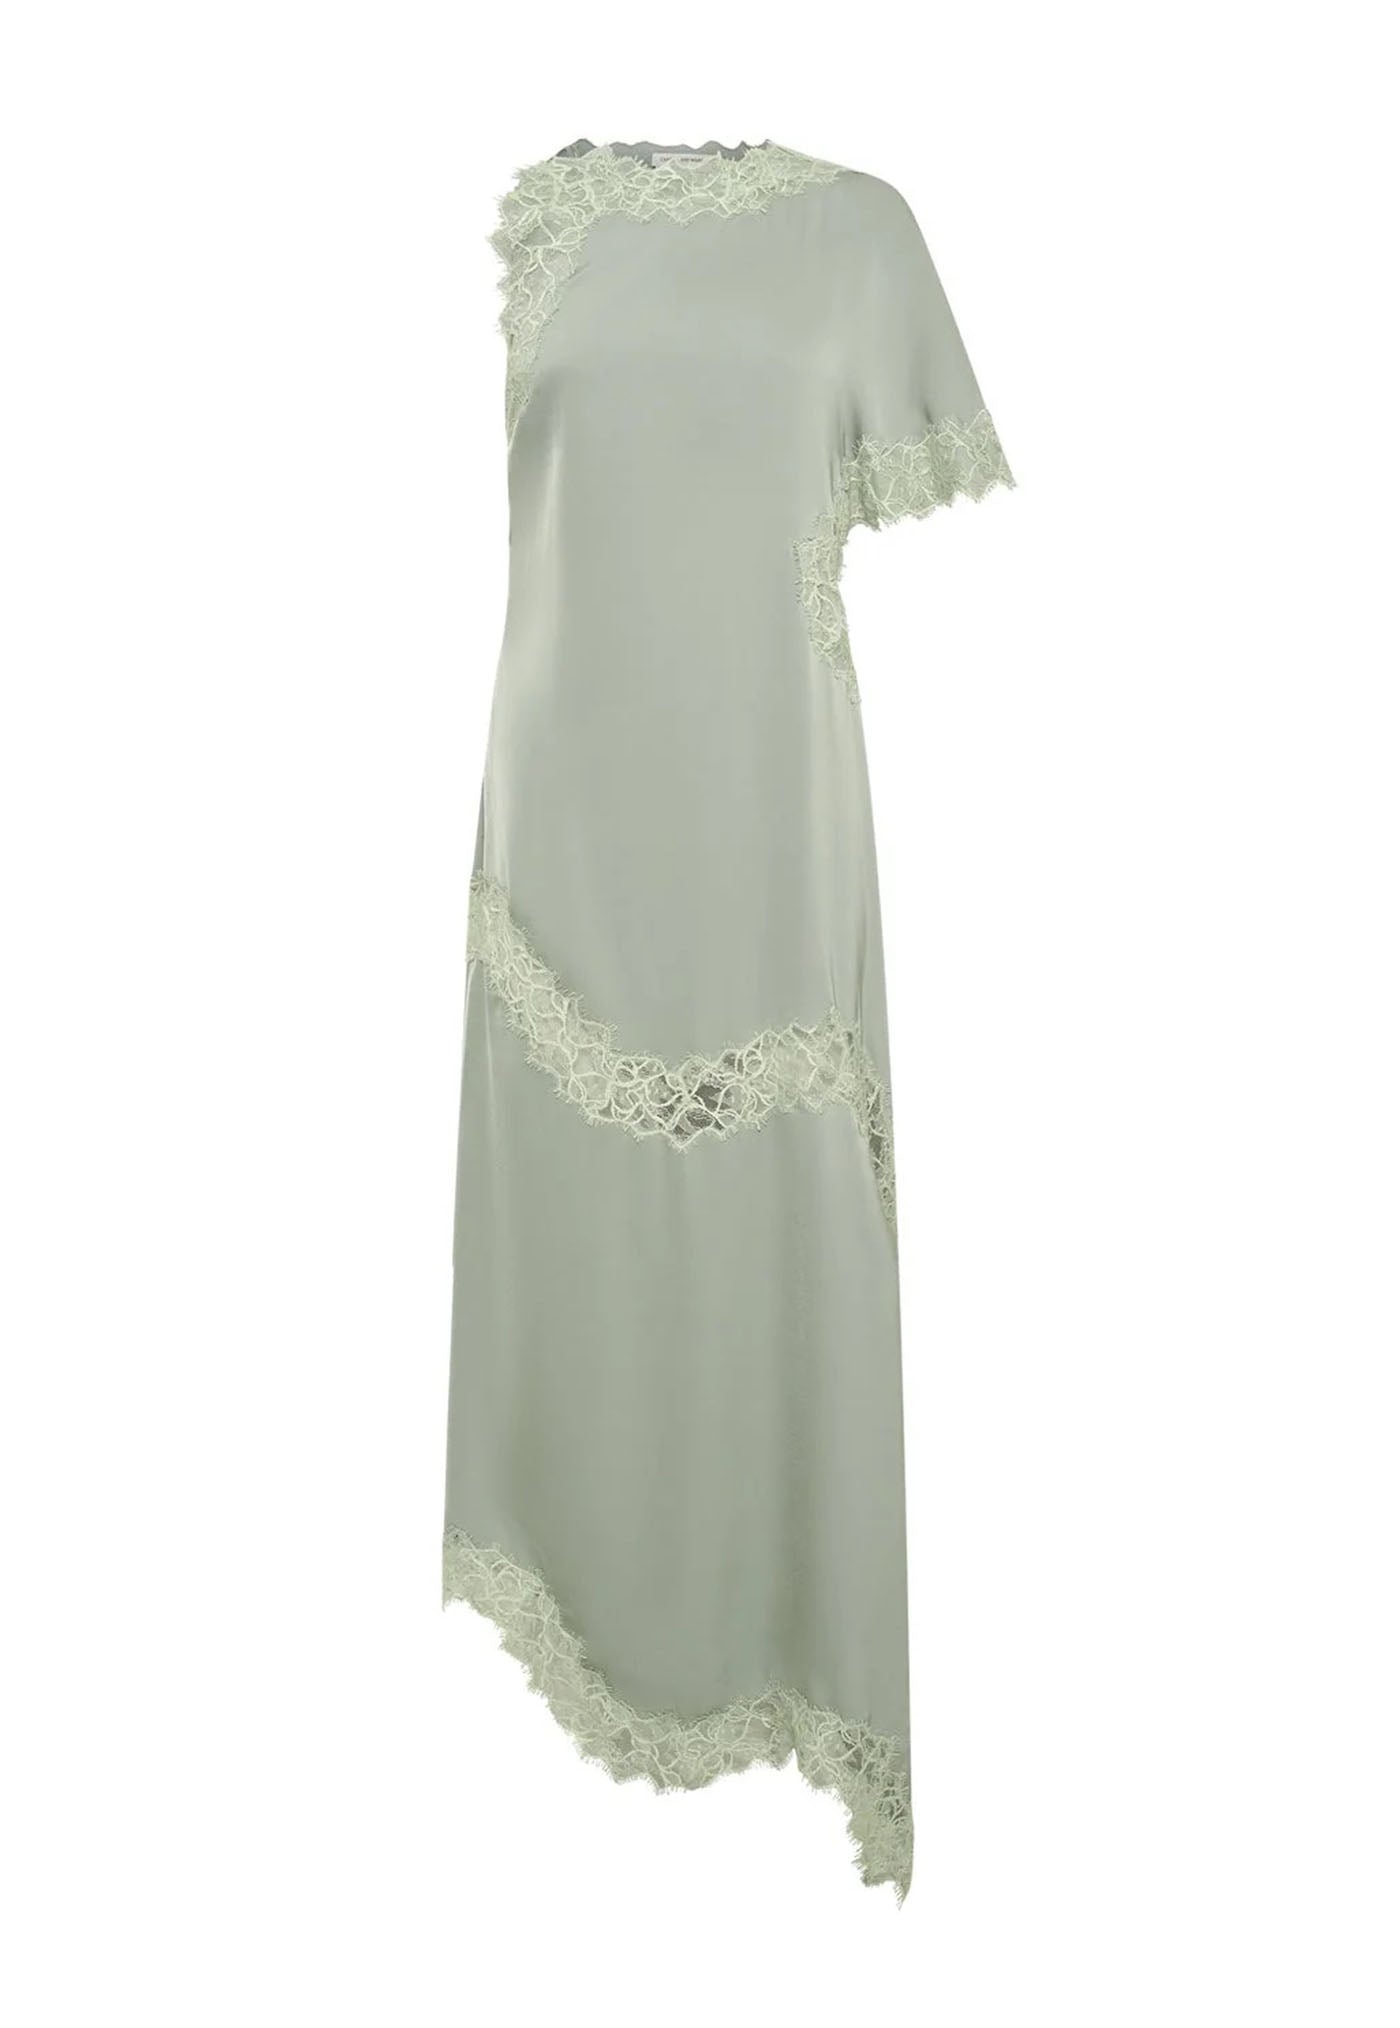 Melle Dress - Mint sold by Angel Divine